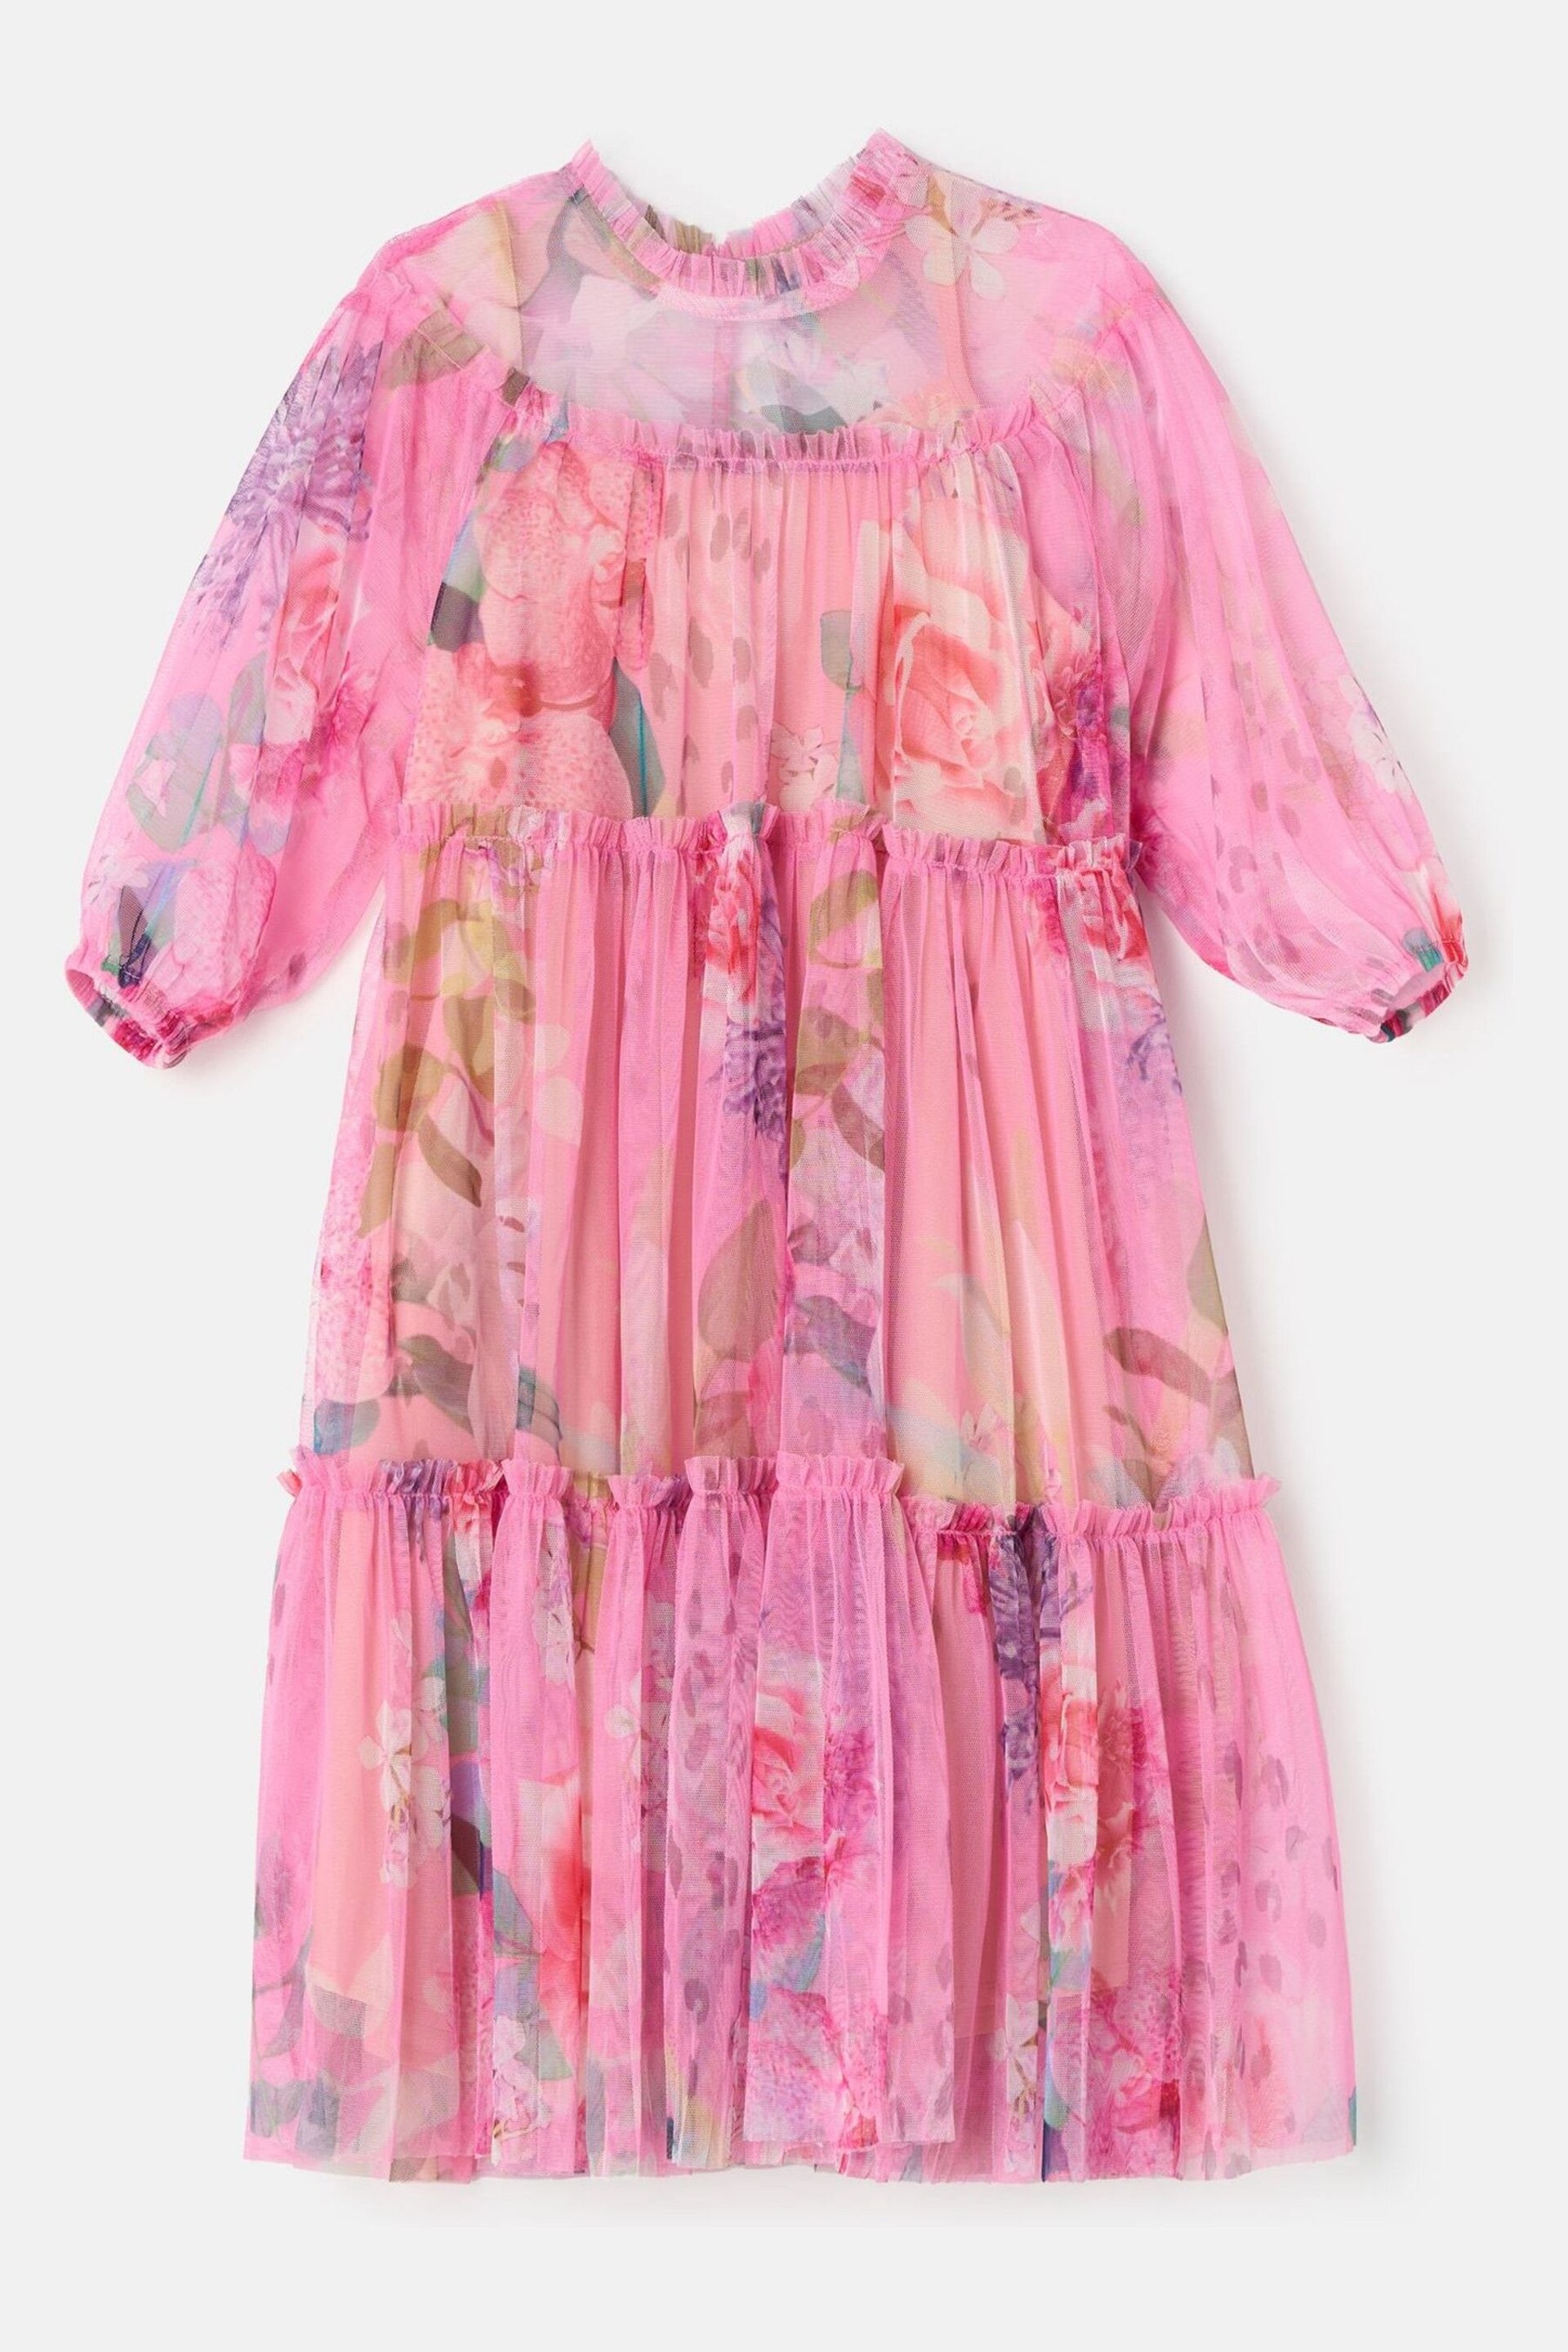 Angel & Rocket Pink Floral Eleanor Print Mesh Dress - Image 4 of 6